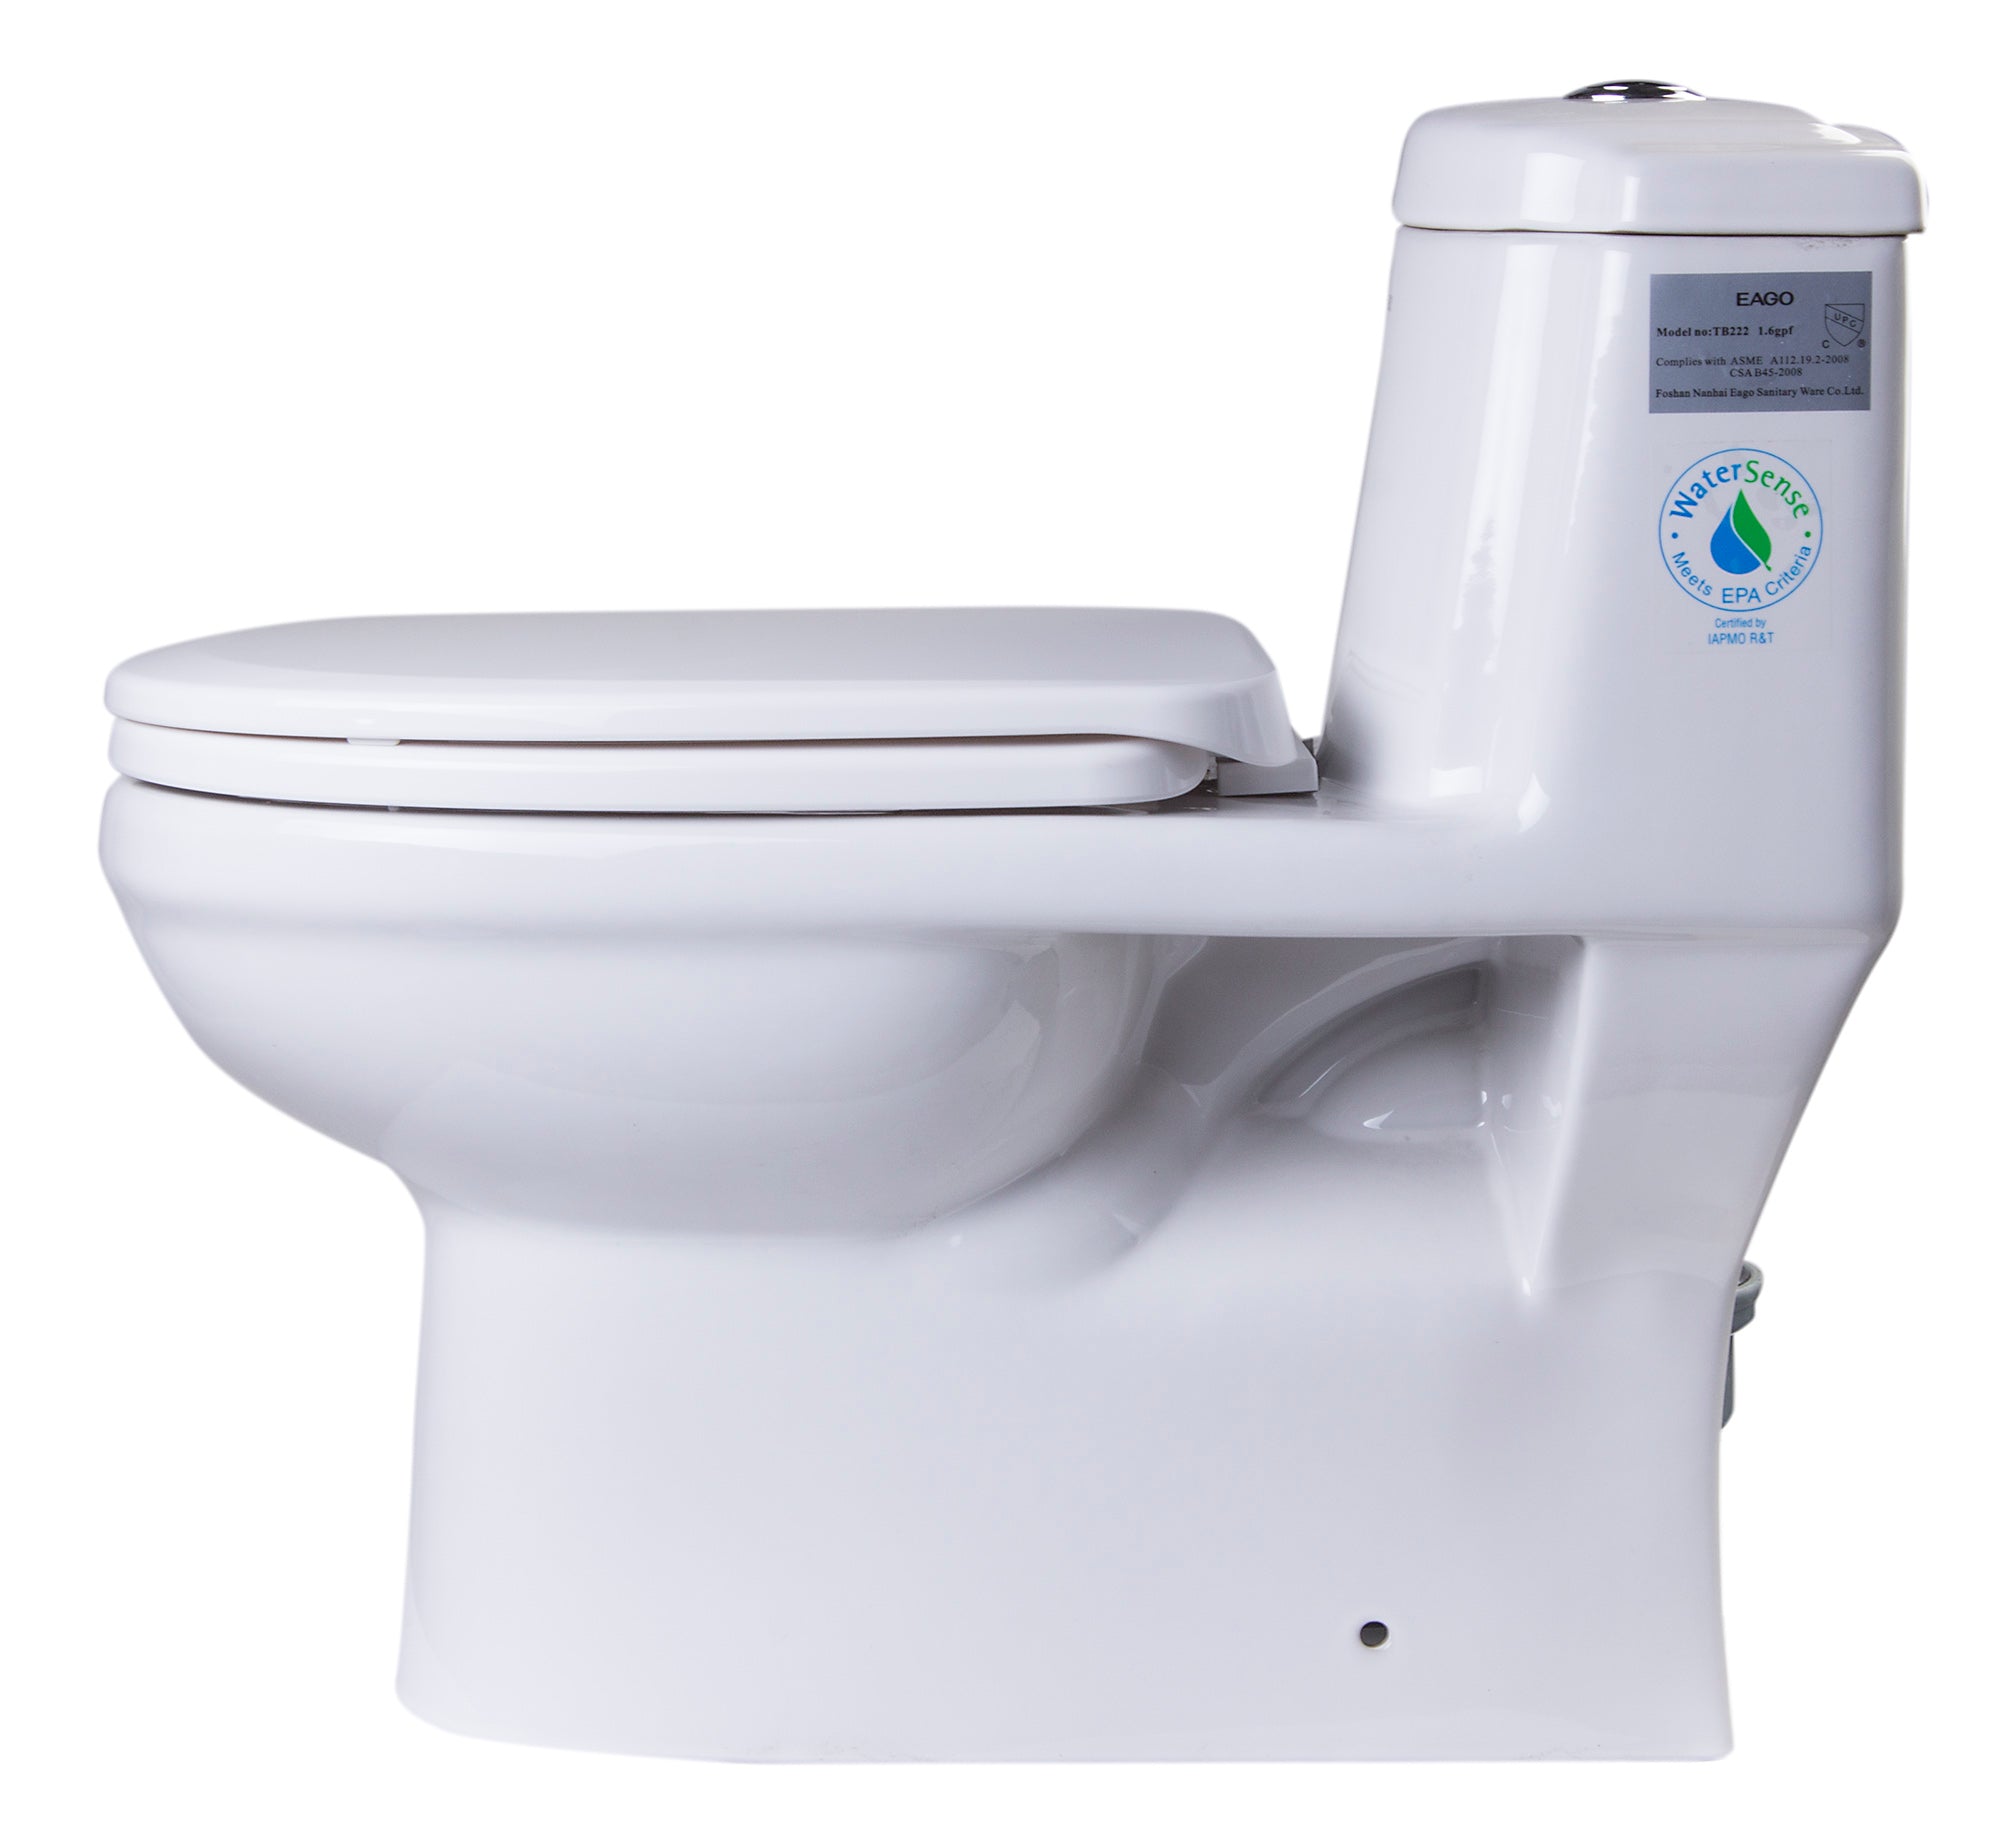 EAGO TB222 Toilet Dual-Flush High Efficiency Low Flush White